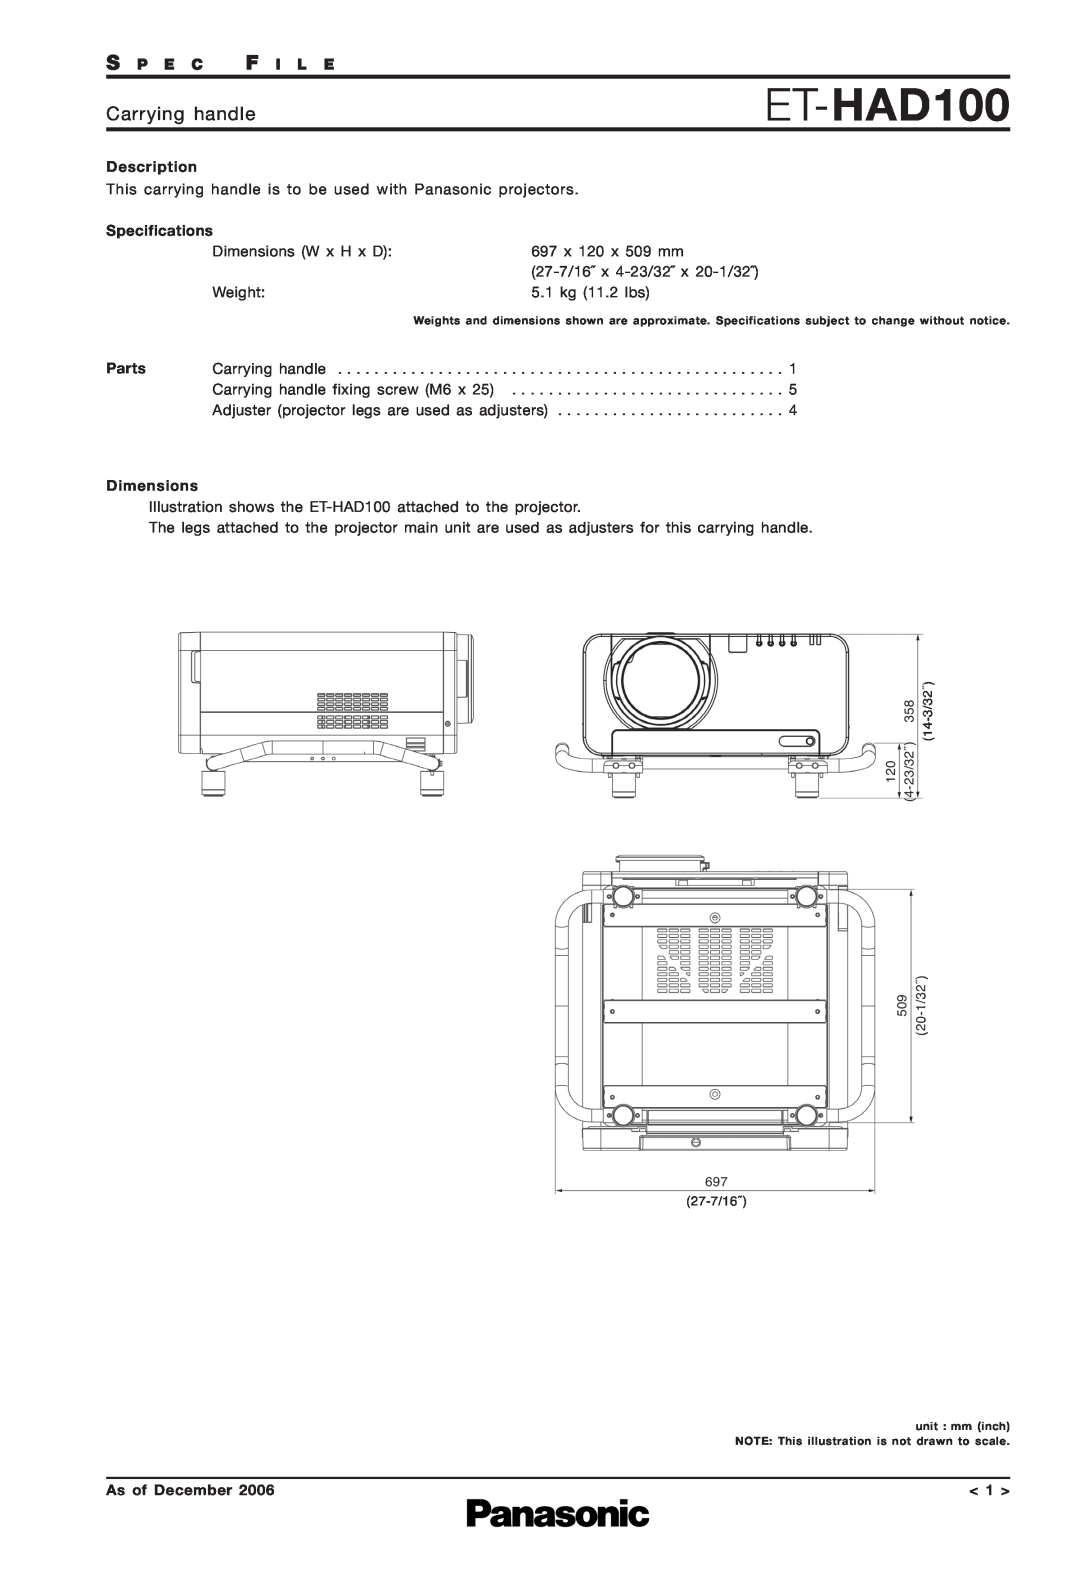 Panasonic ET-HAD100 specifications Carrying handle, S P E C F I L E, Description, Specifications, Parts, Dimensions 